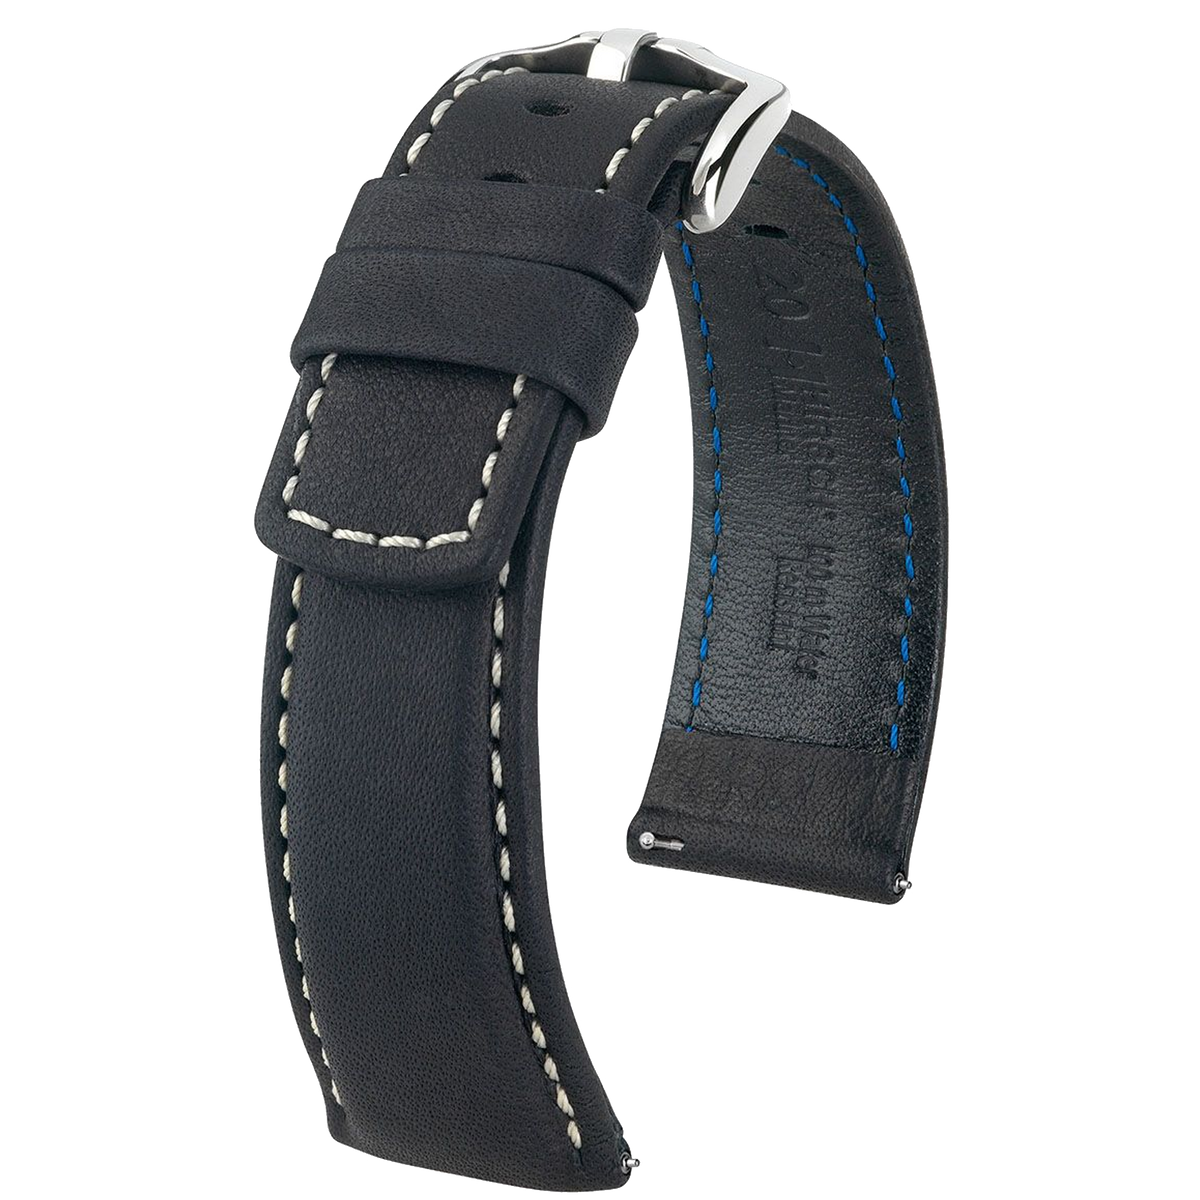 Hirsch MARINER Water-Resistant Leather Watch Strap